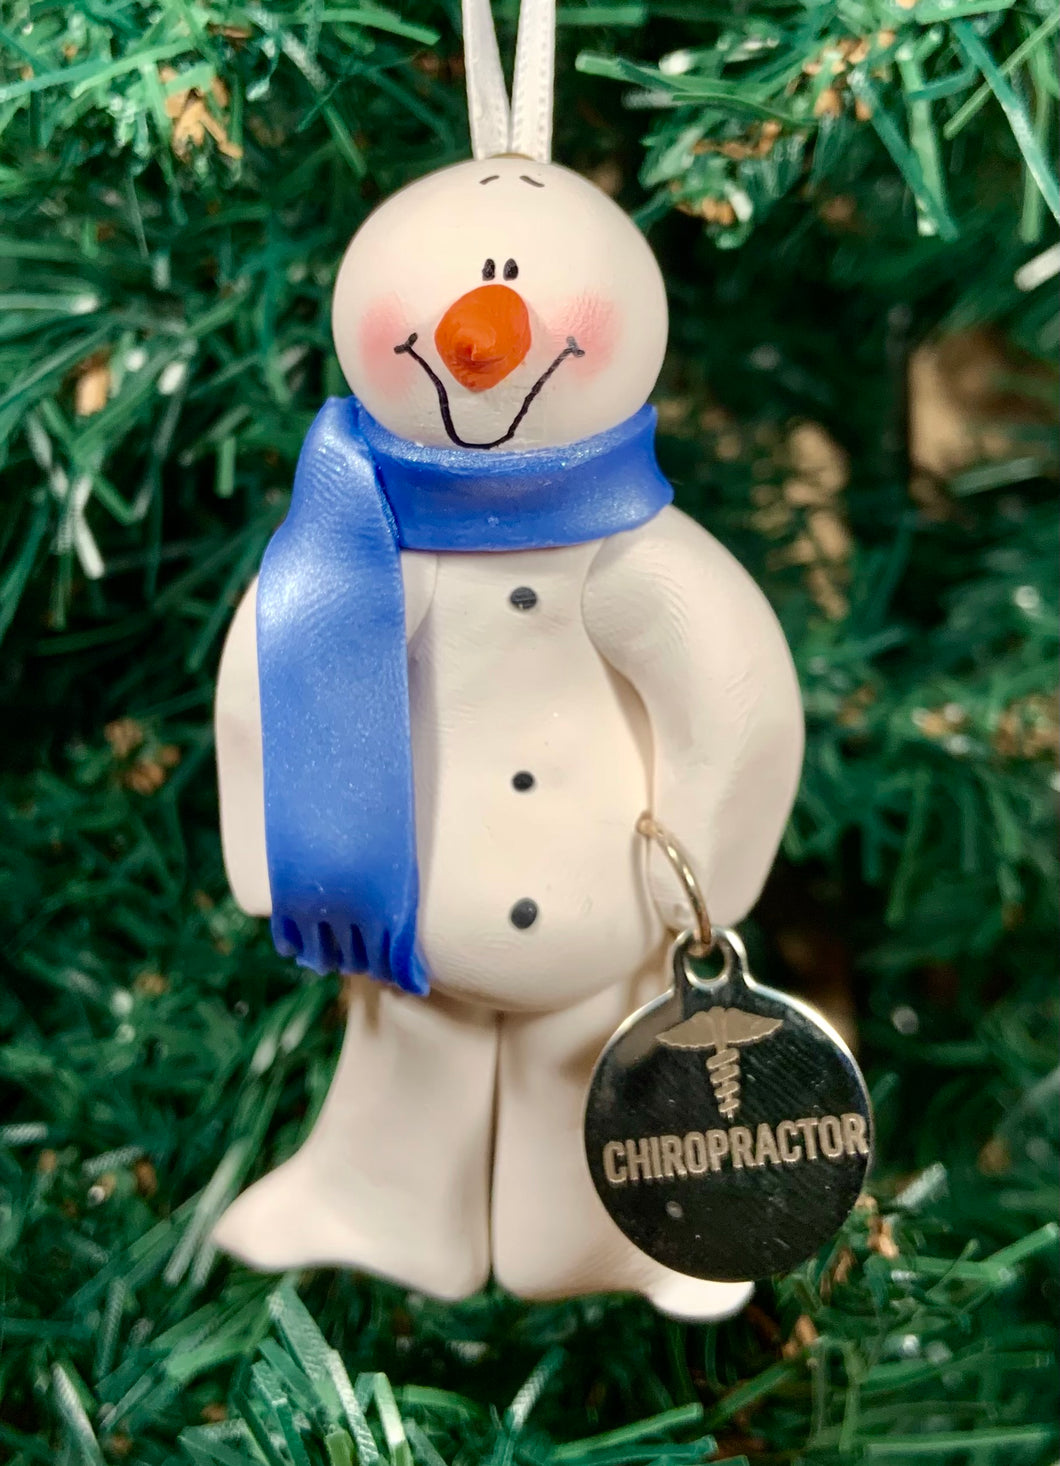 Chiropractor Snowman Tree Ornament